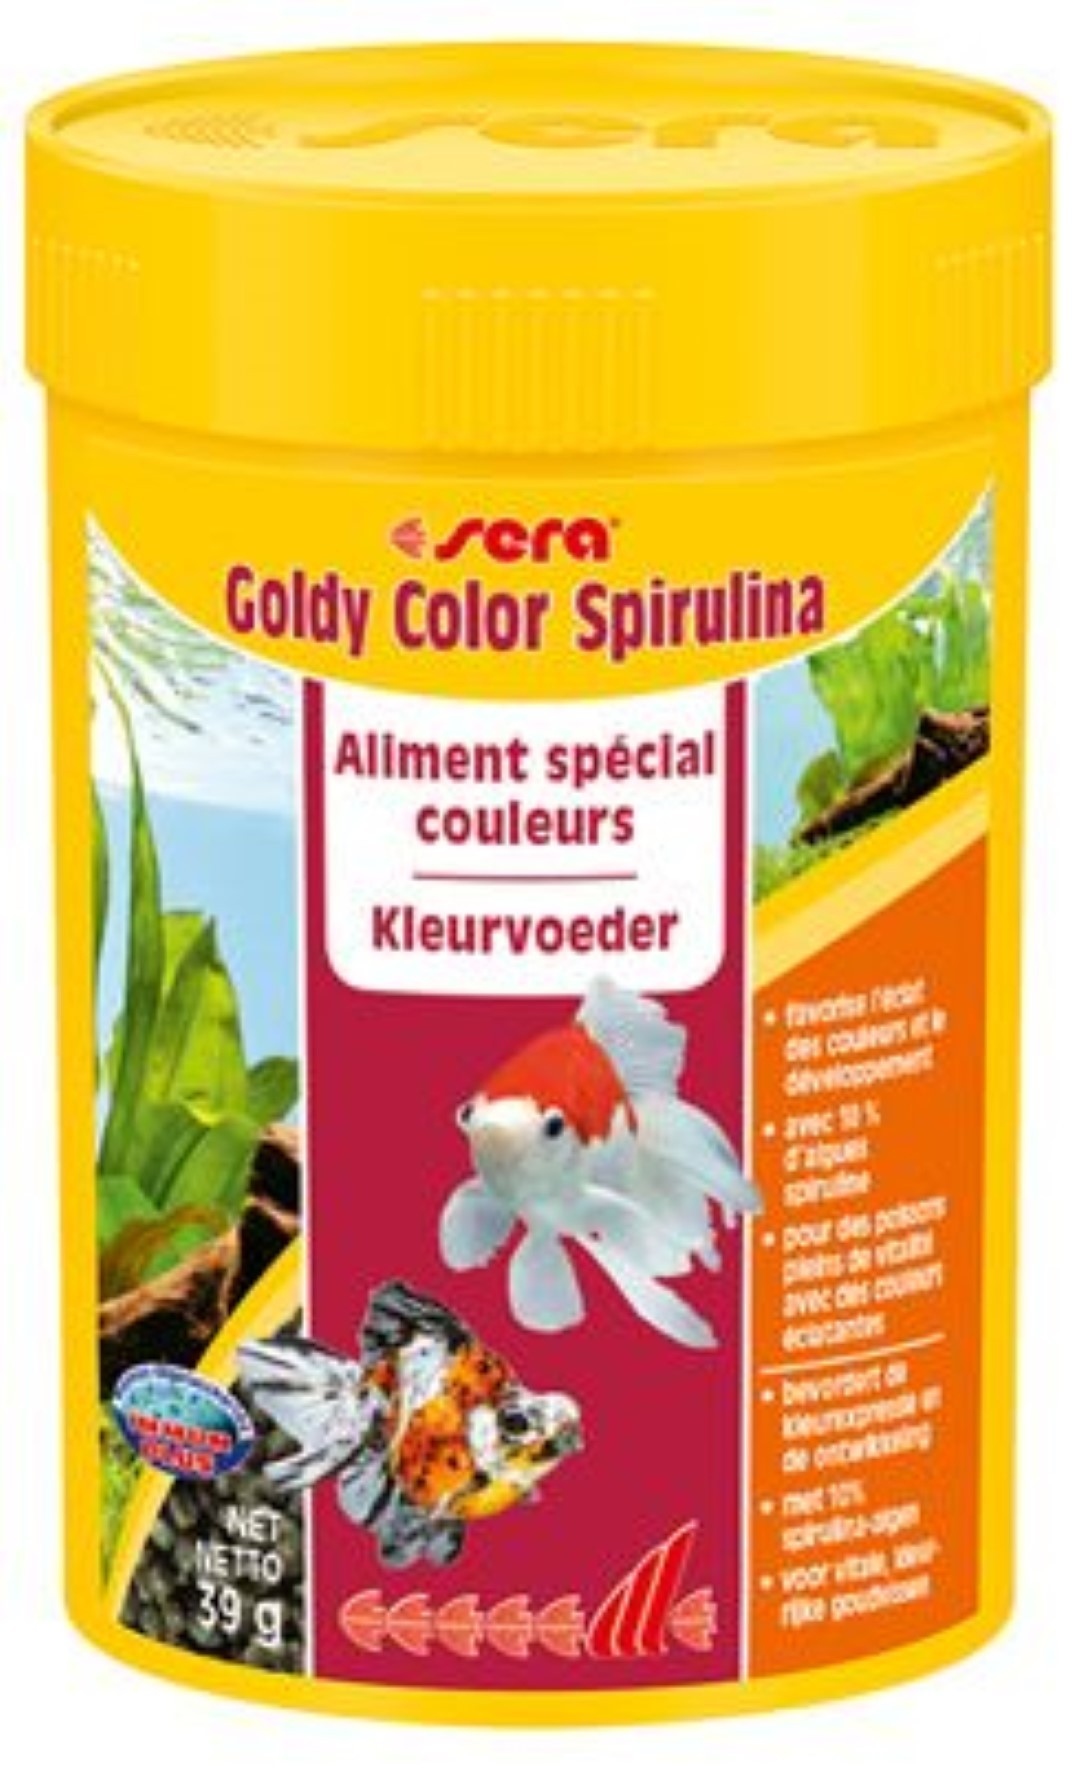 https://www.warentuin.nl/media/catalog/product/1/7/1774001942008815_sera_dierenverzorging_goldy_color_spirulina_sera_b5c6.jpg